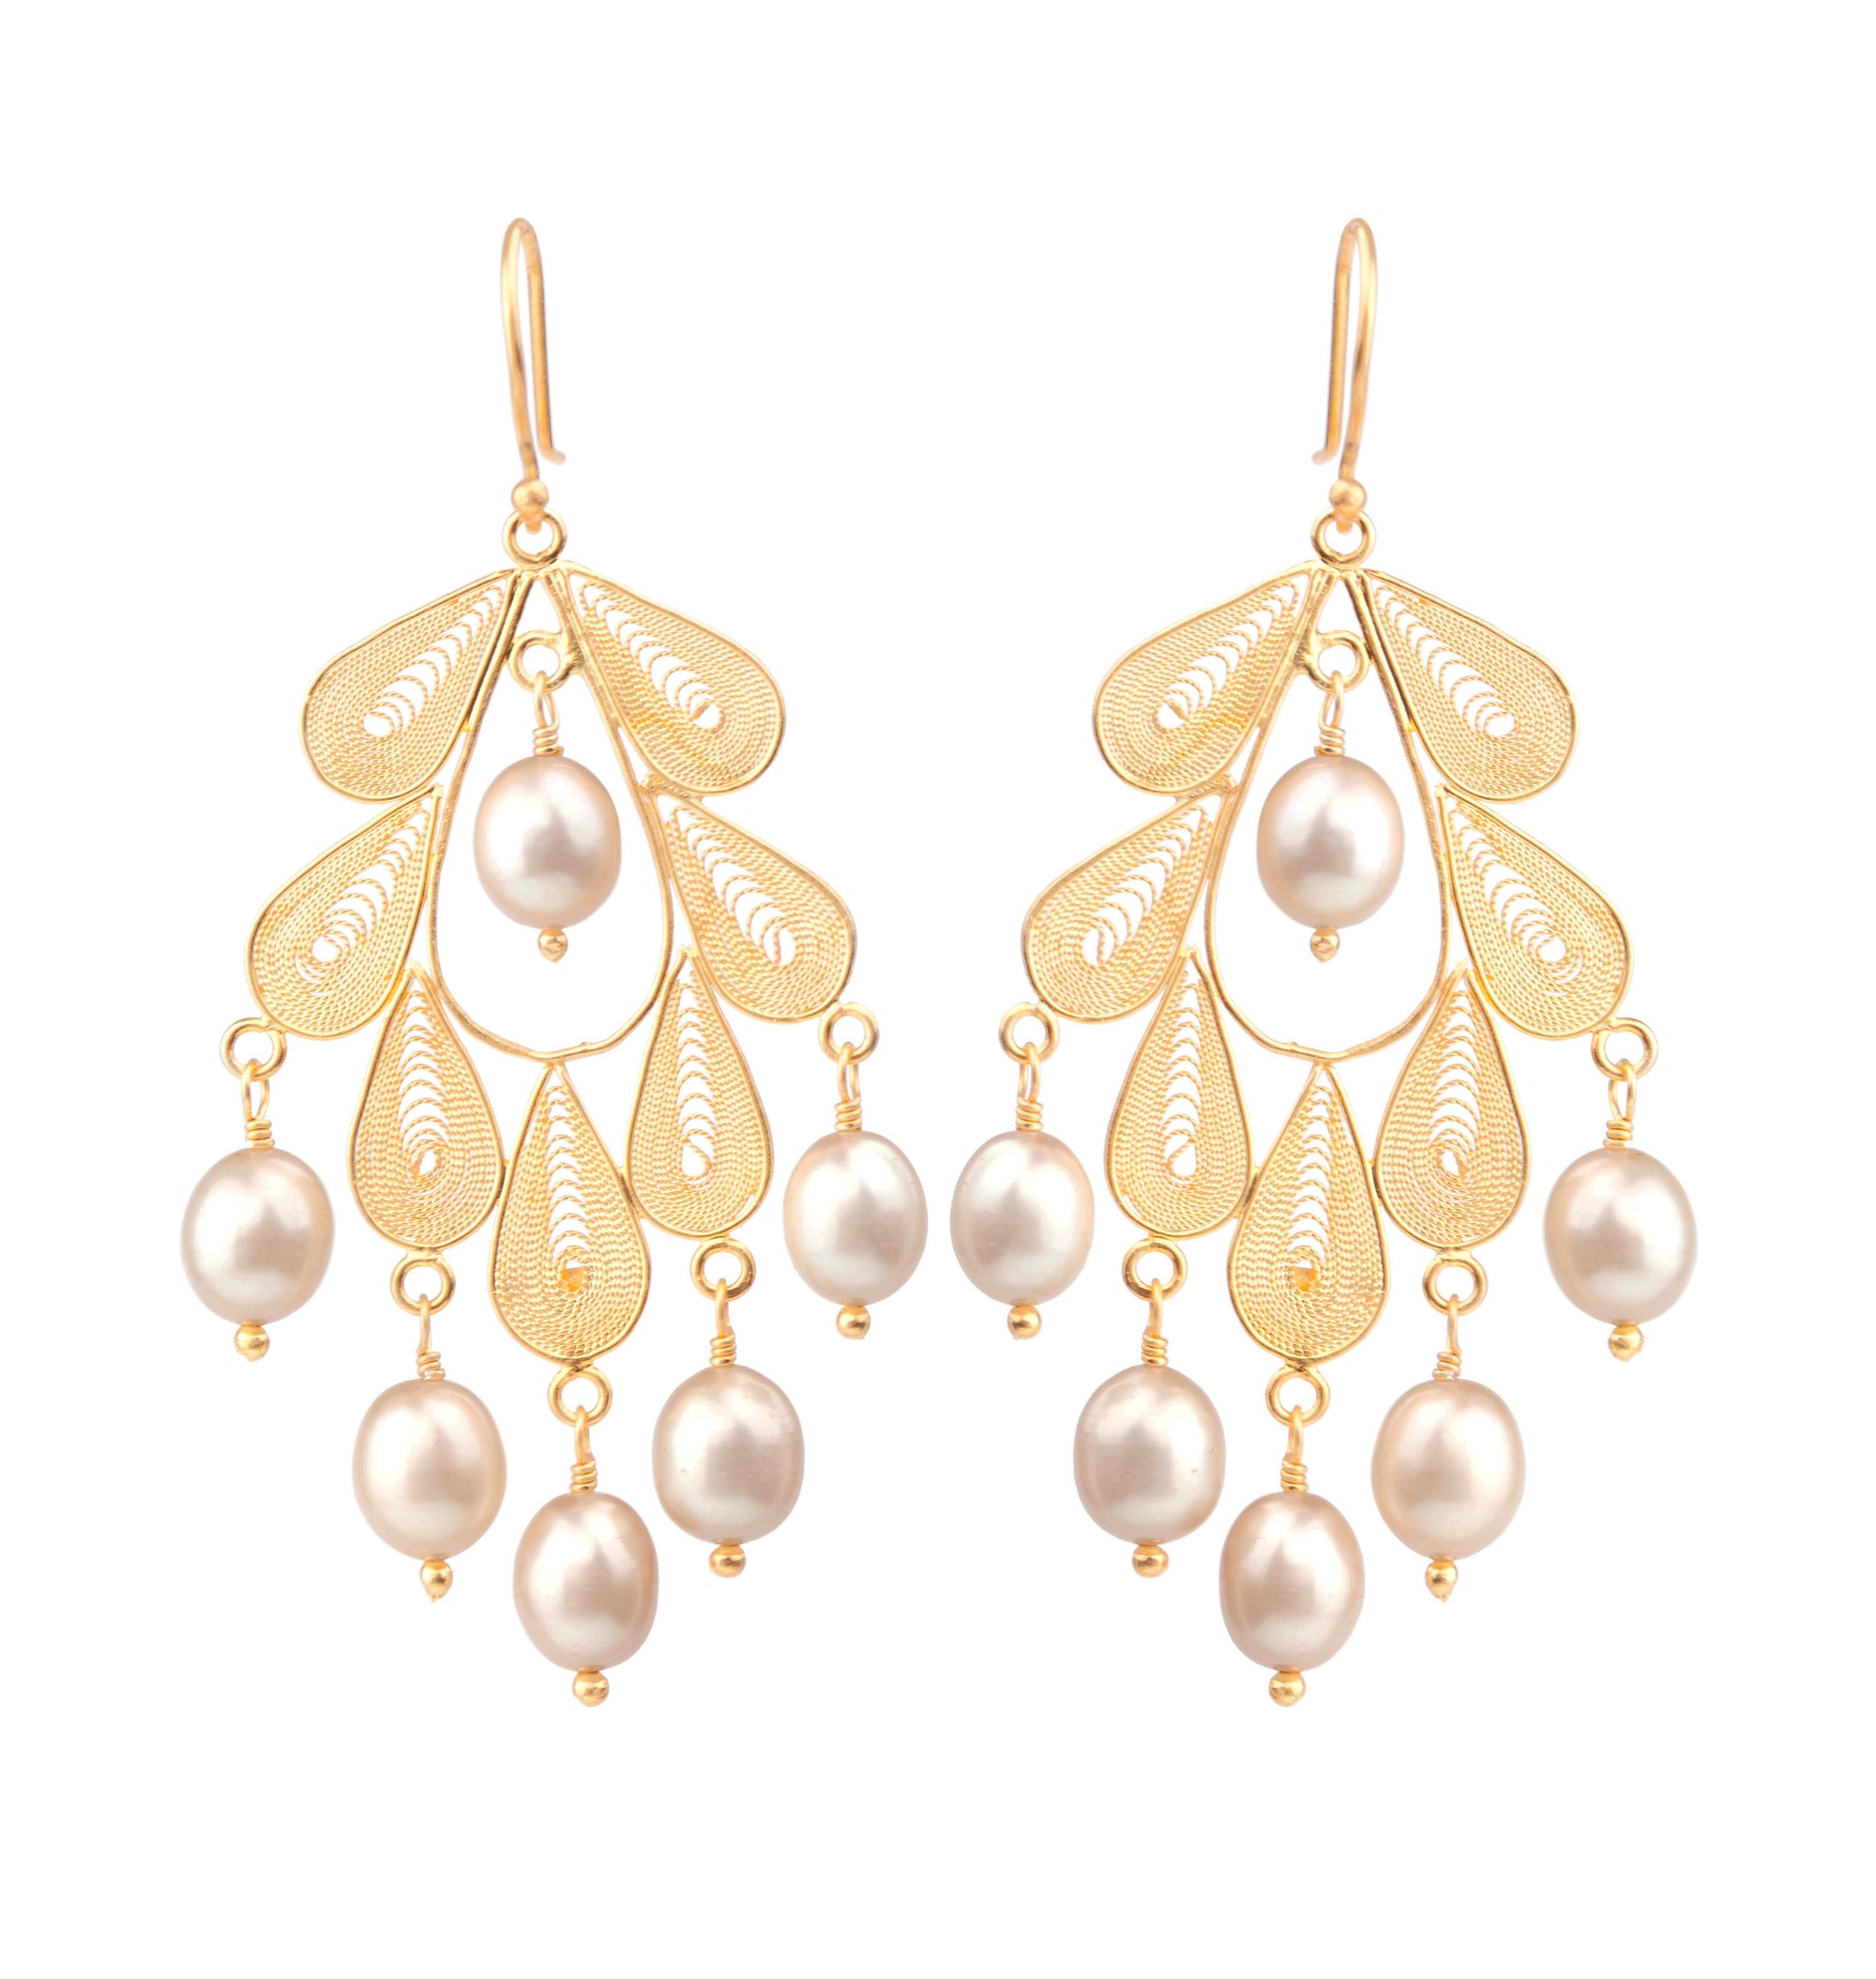 Classic Leaf earrings Gold - cream pearls